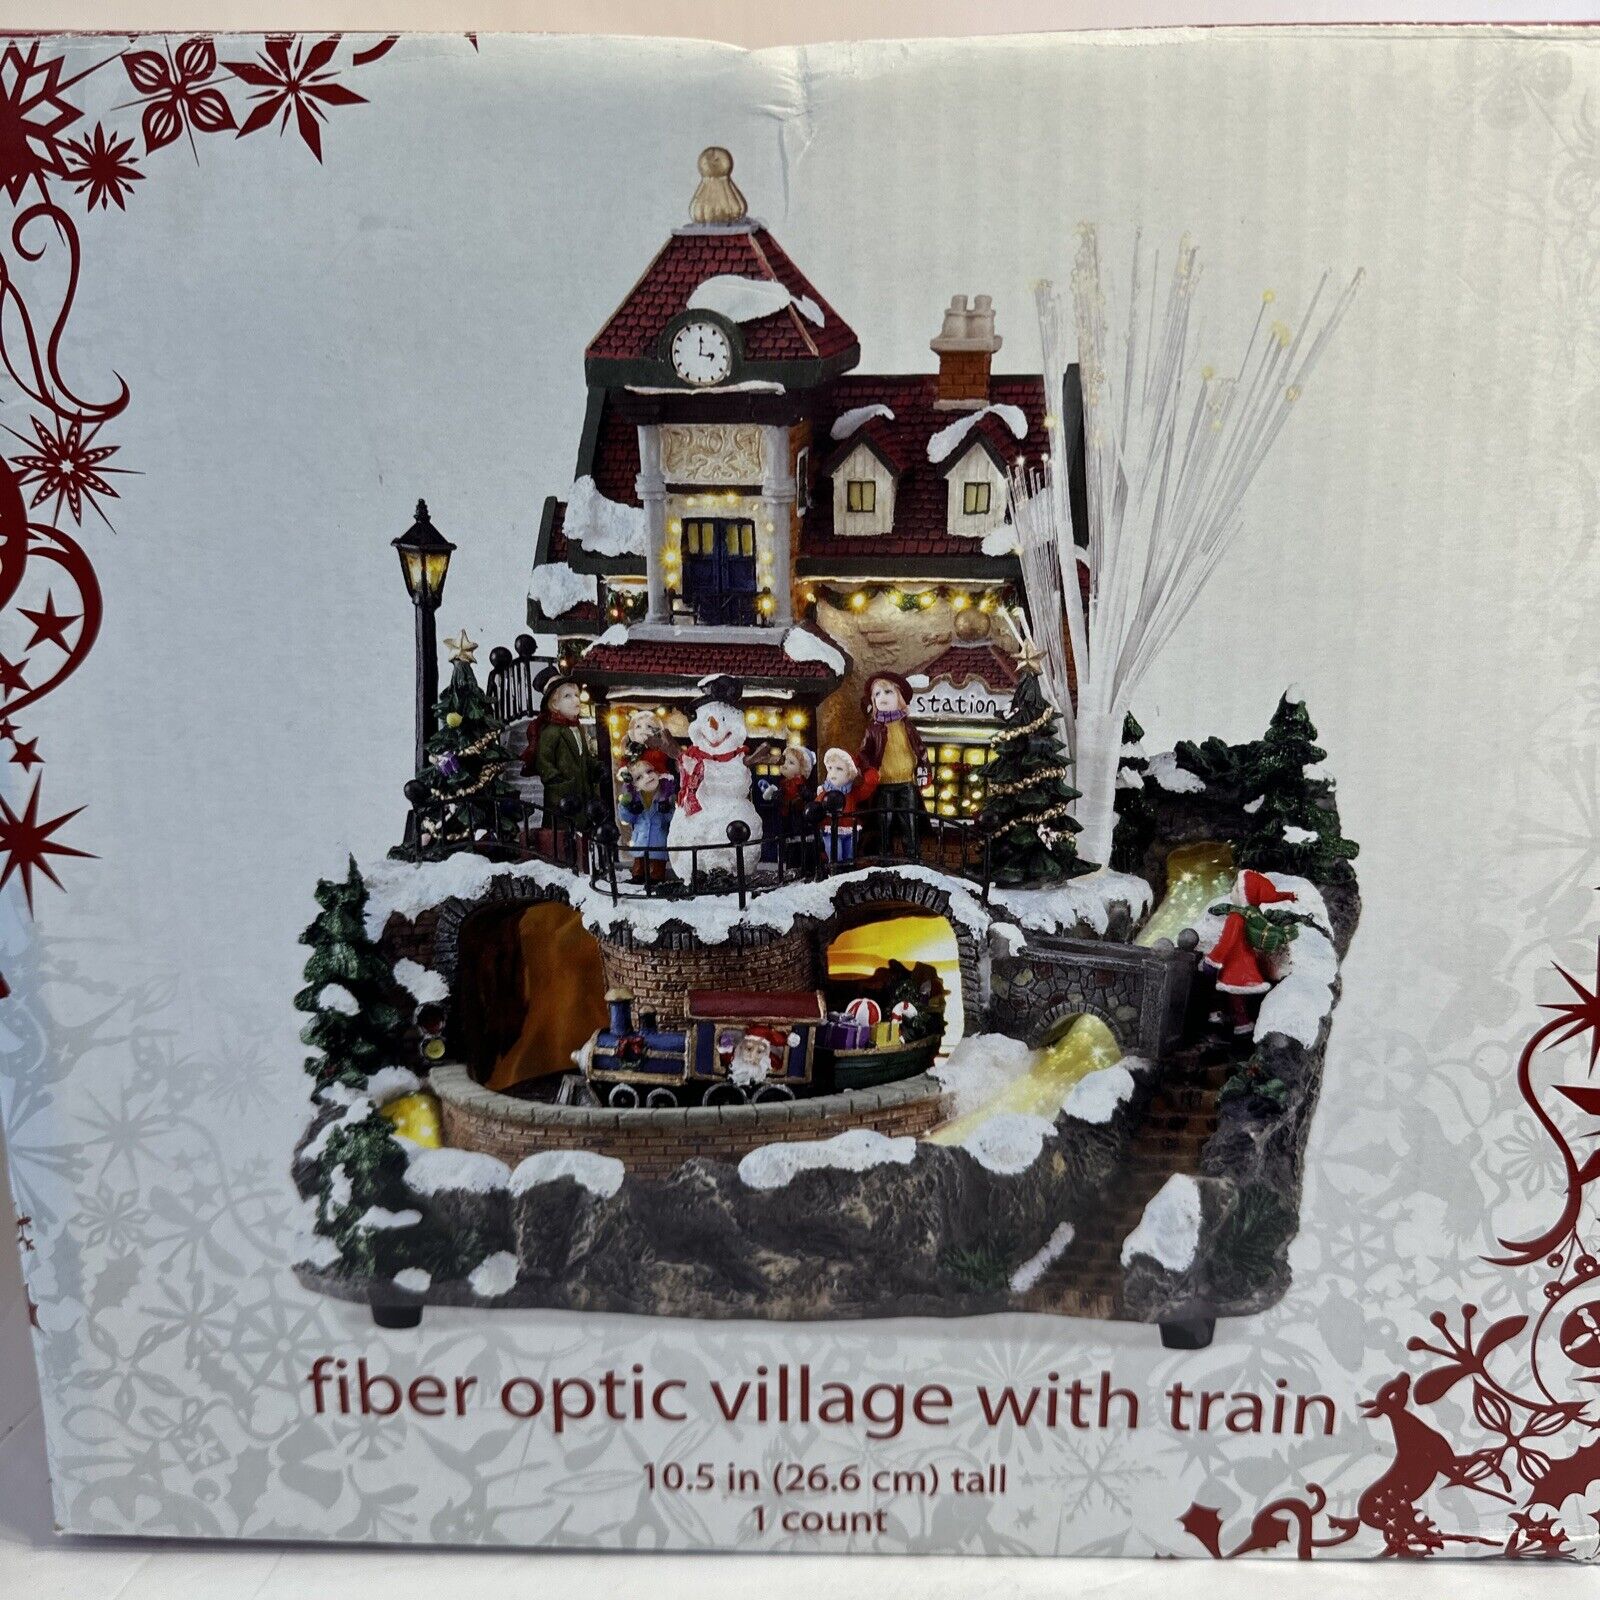 Target Fiber Optic Village with Train Christmas Scene Decoration Lights Up Music